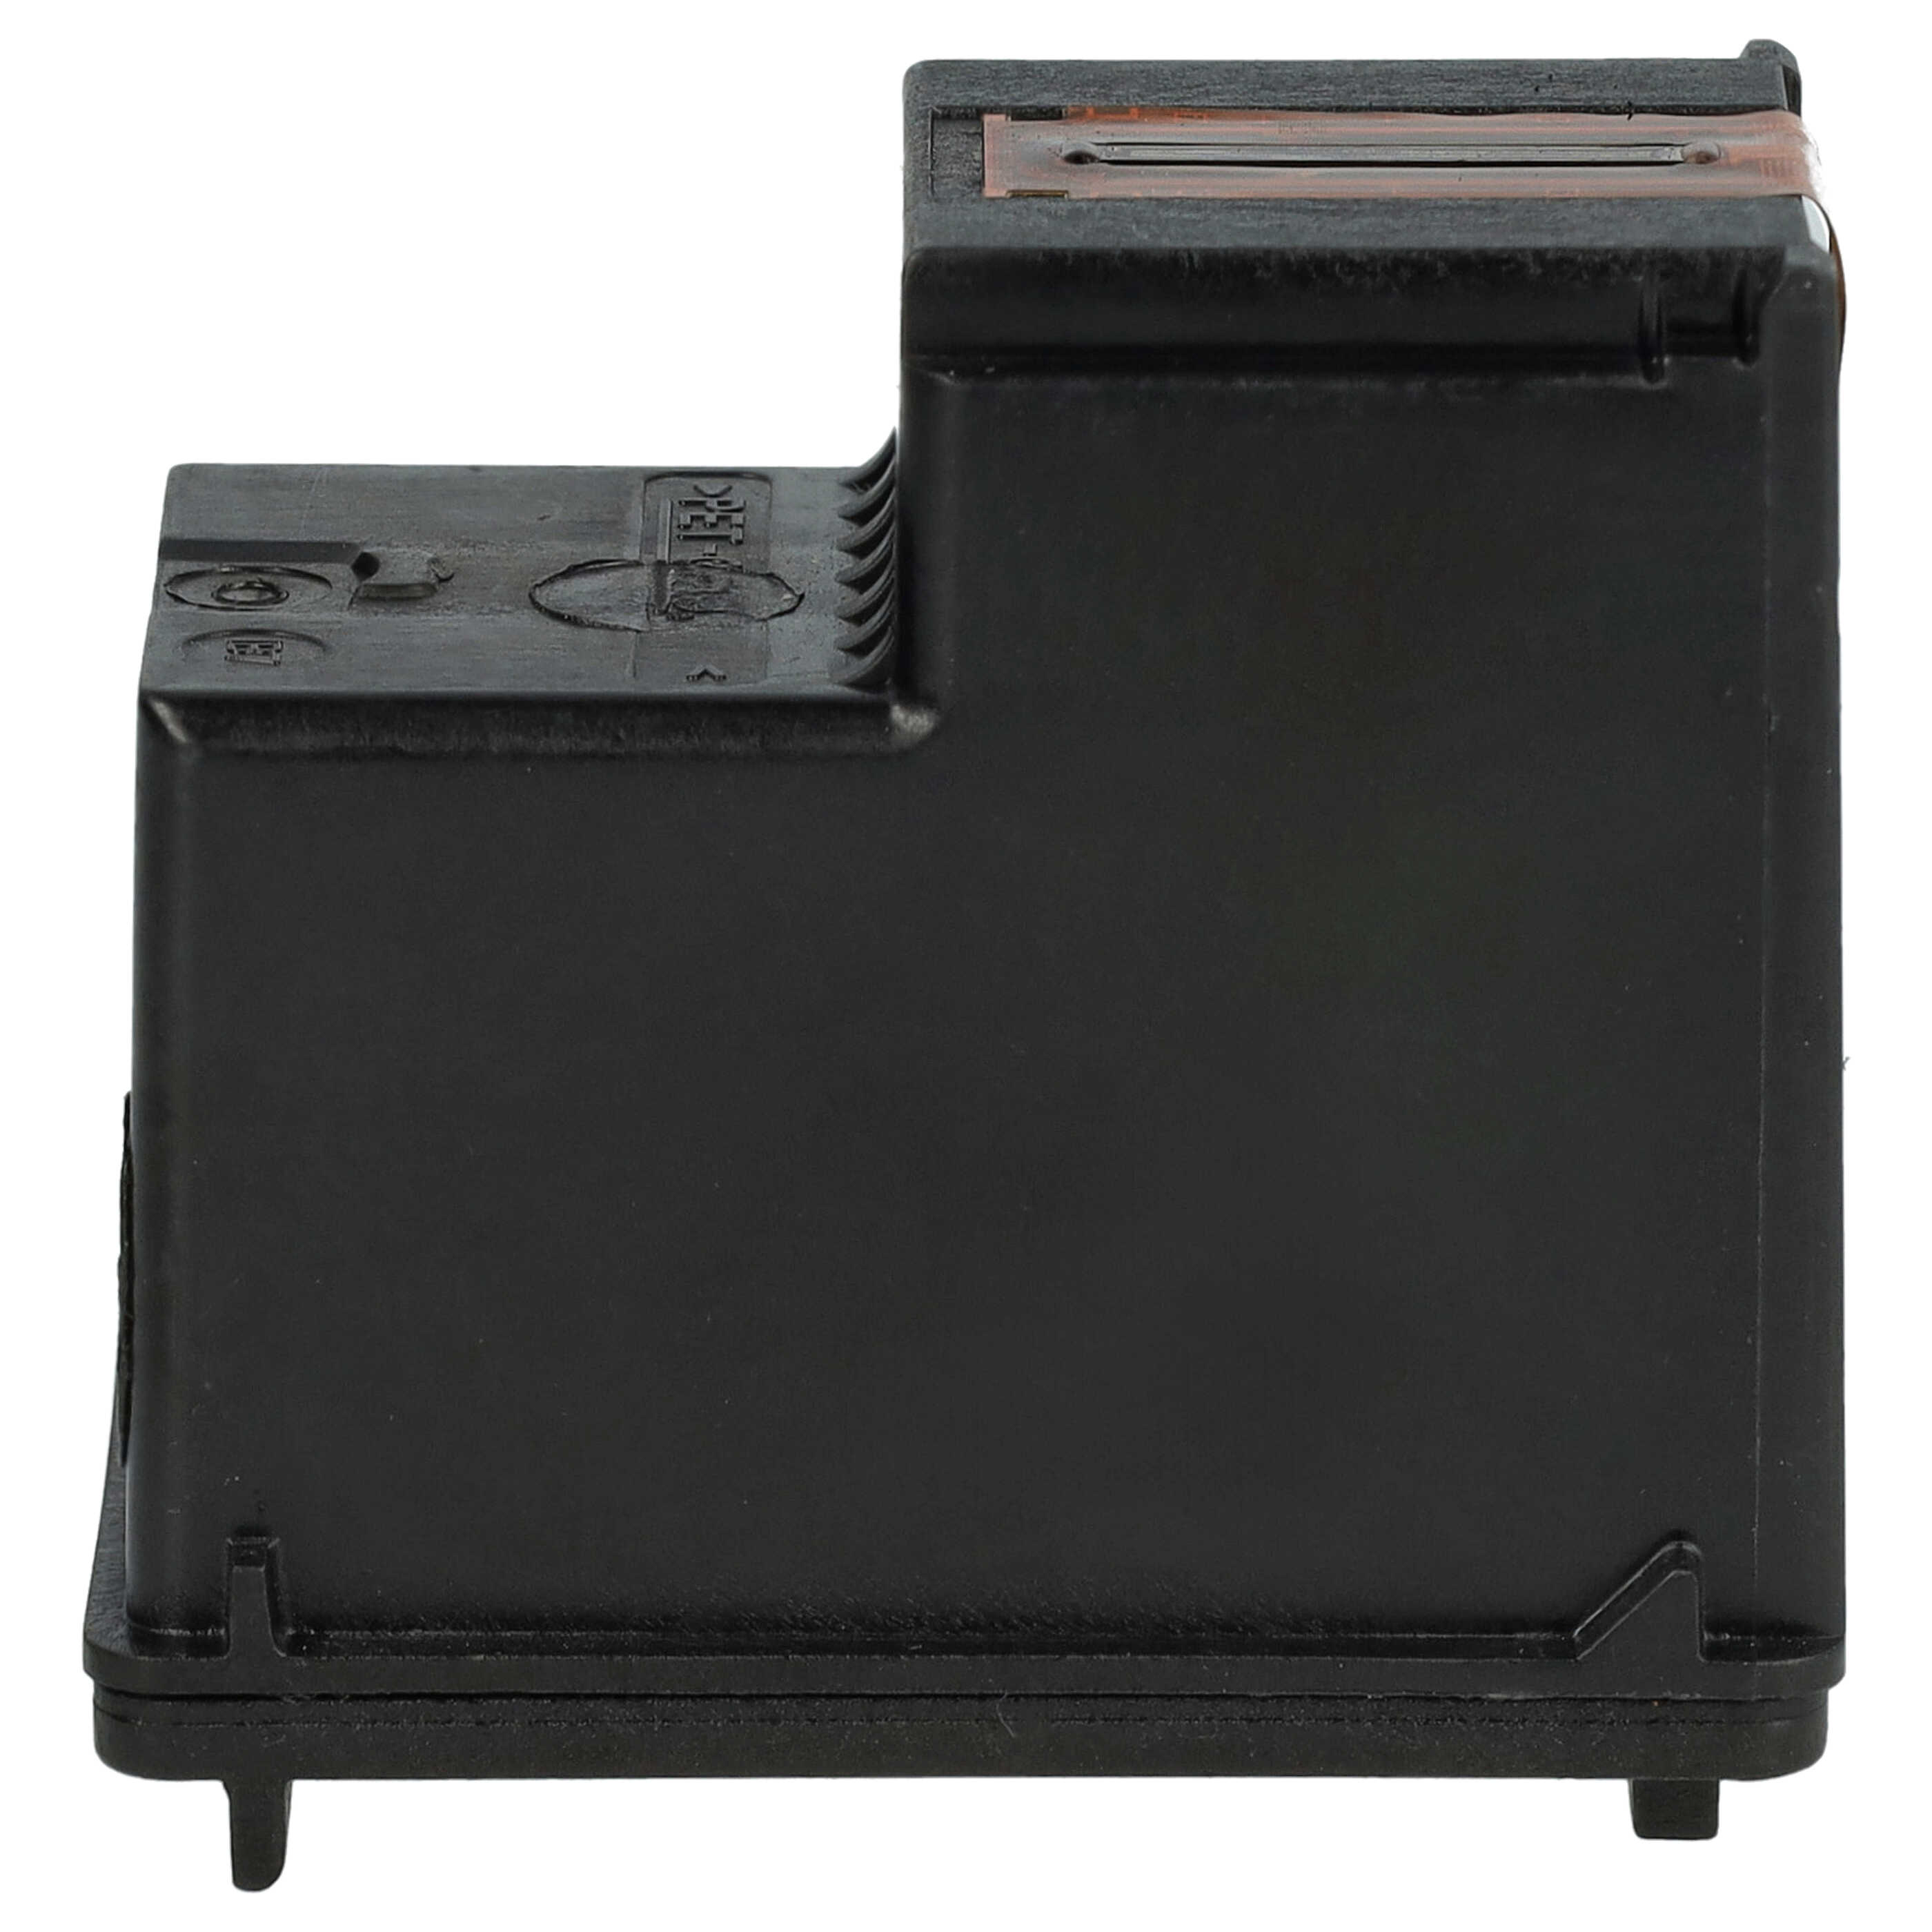 Ink Cartridge Suitable for Officejet HP Printer - Black, Refilled 18 ml